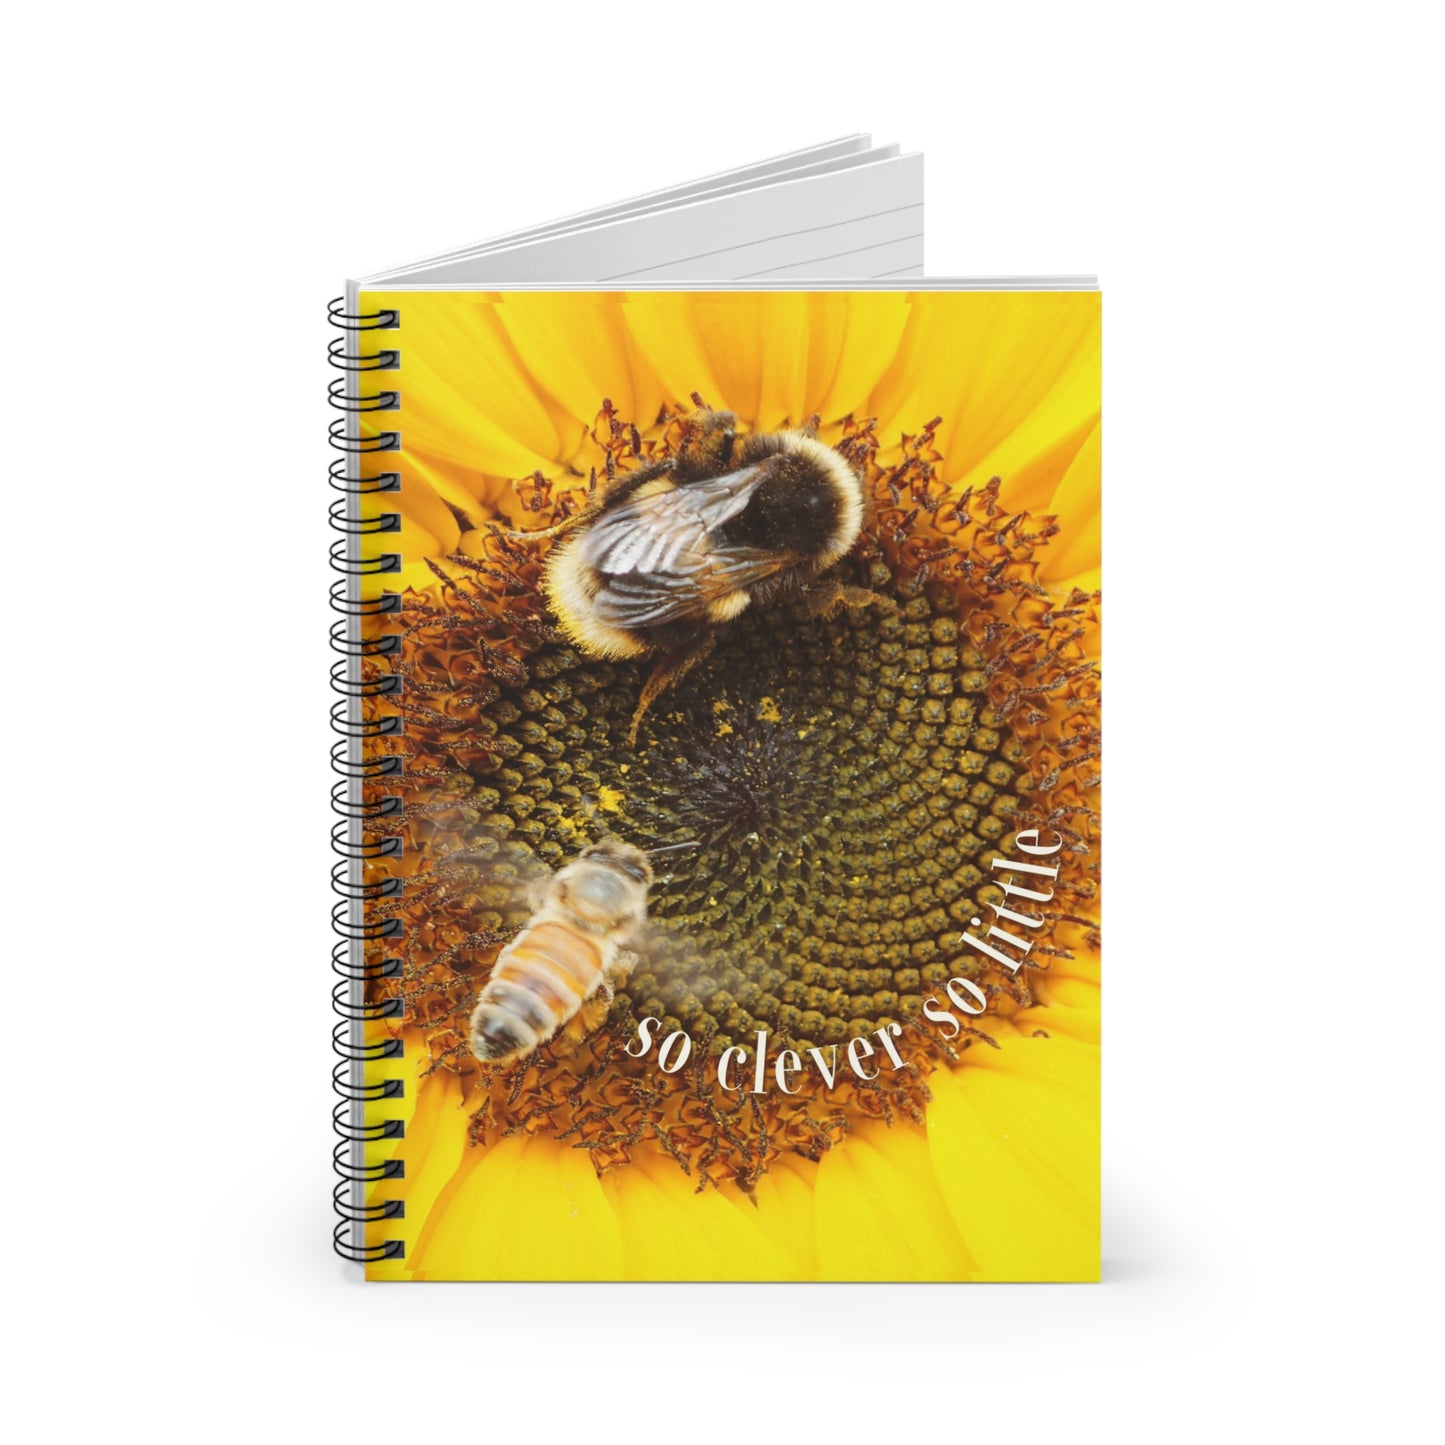 Clever Little Bees Spiral Notebook